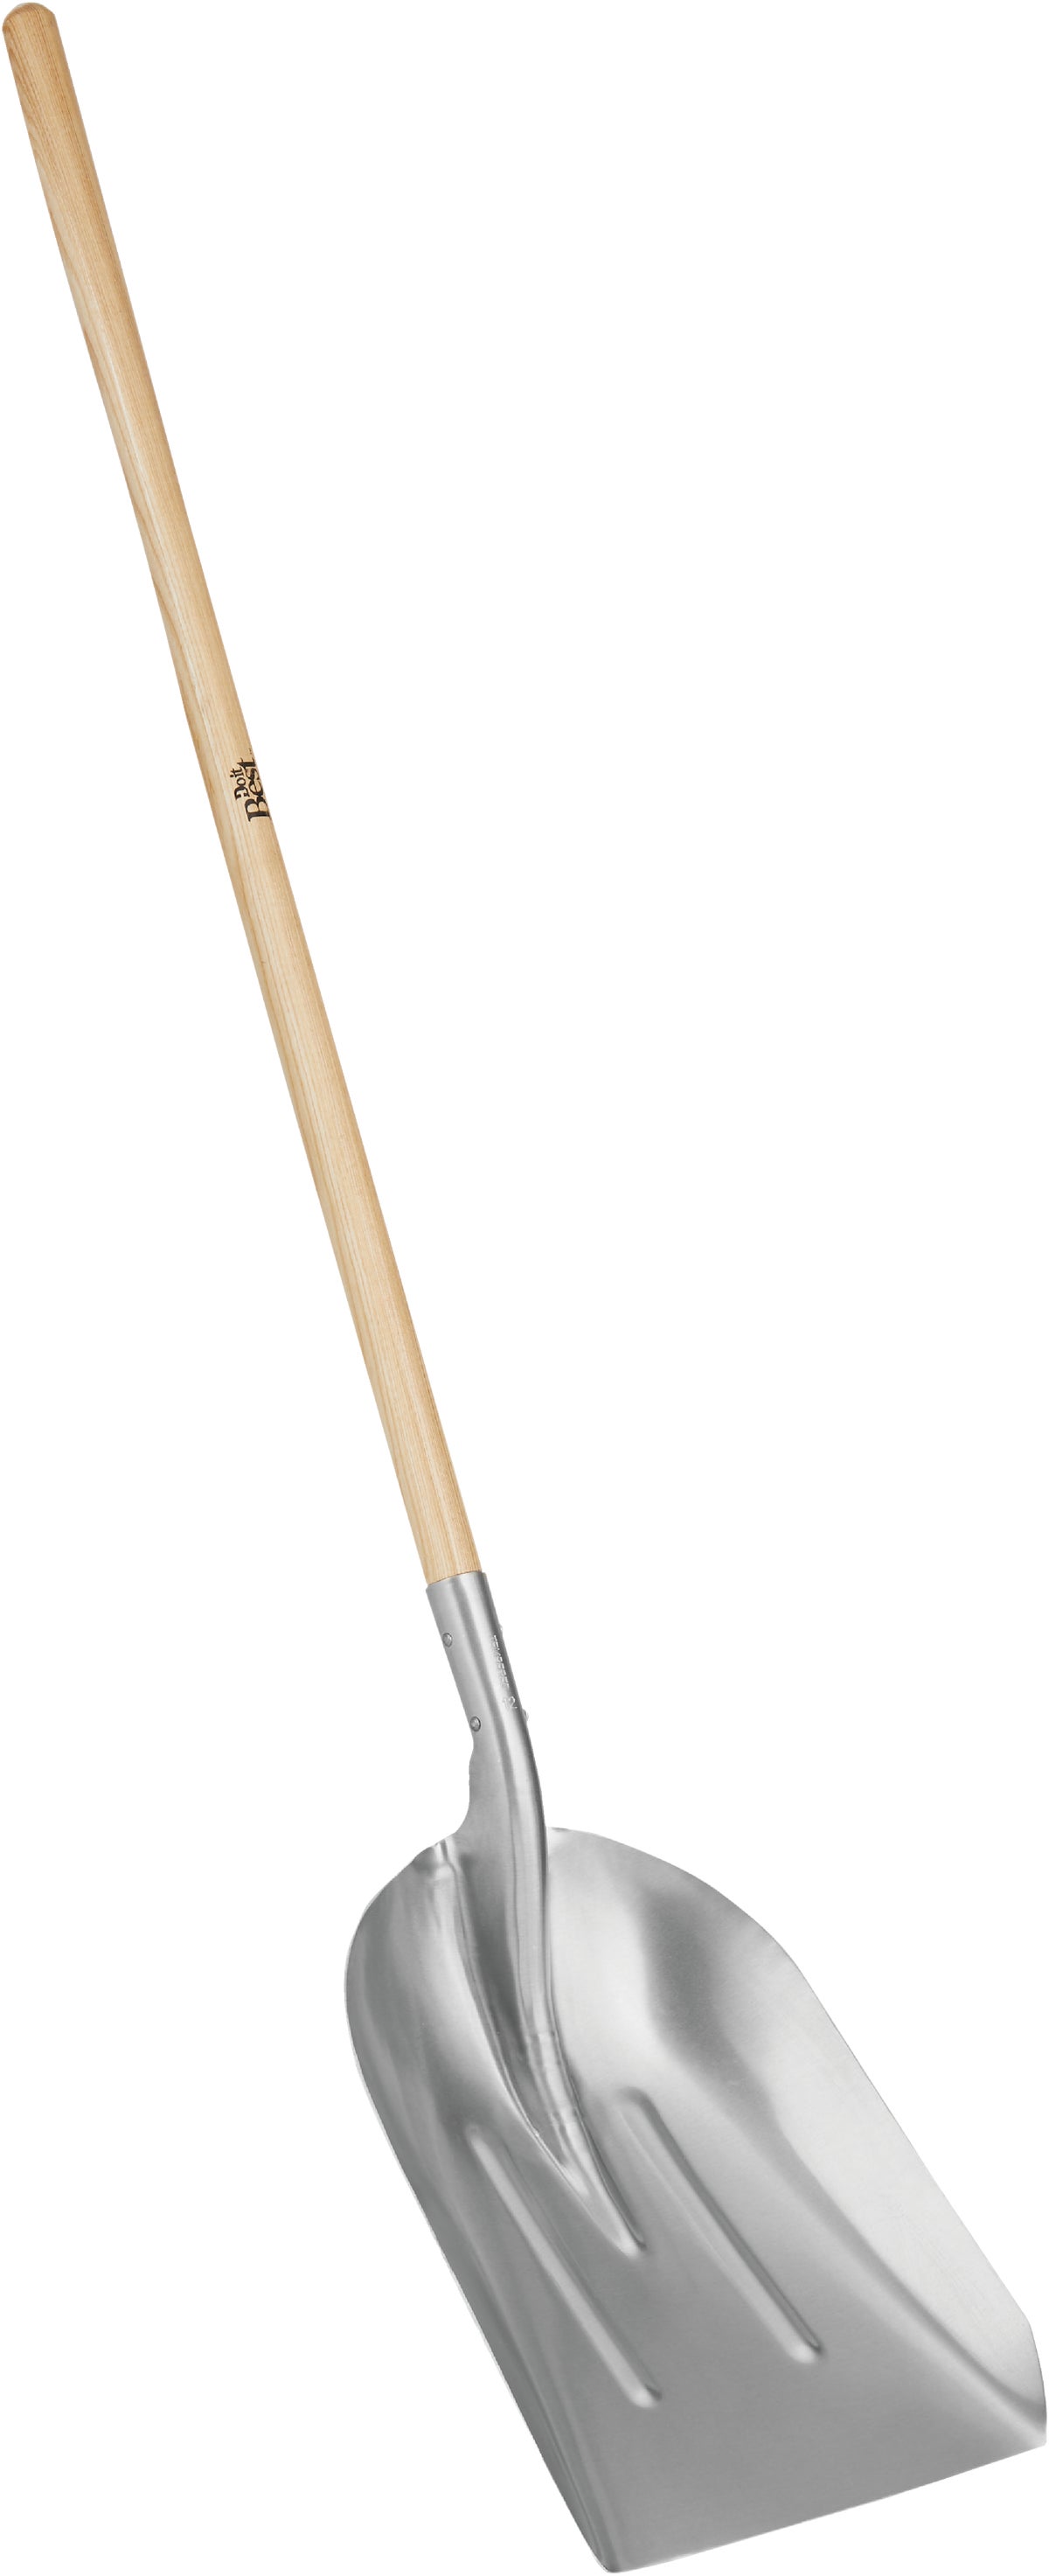 Scoop Shovel, Long, Wood, Aluminum, 18 in. - 4